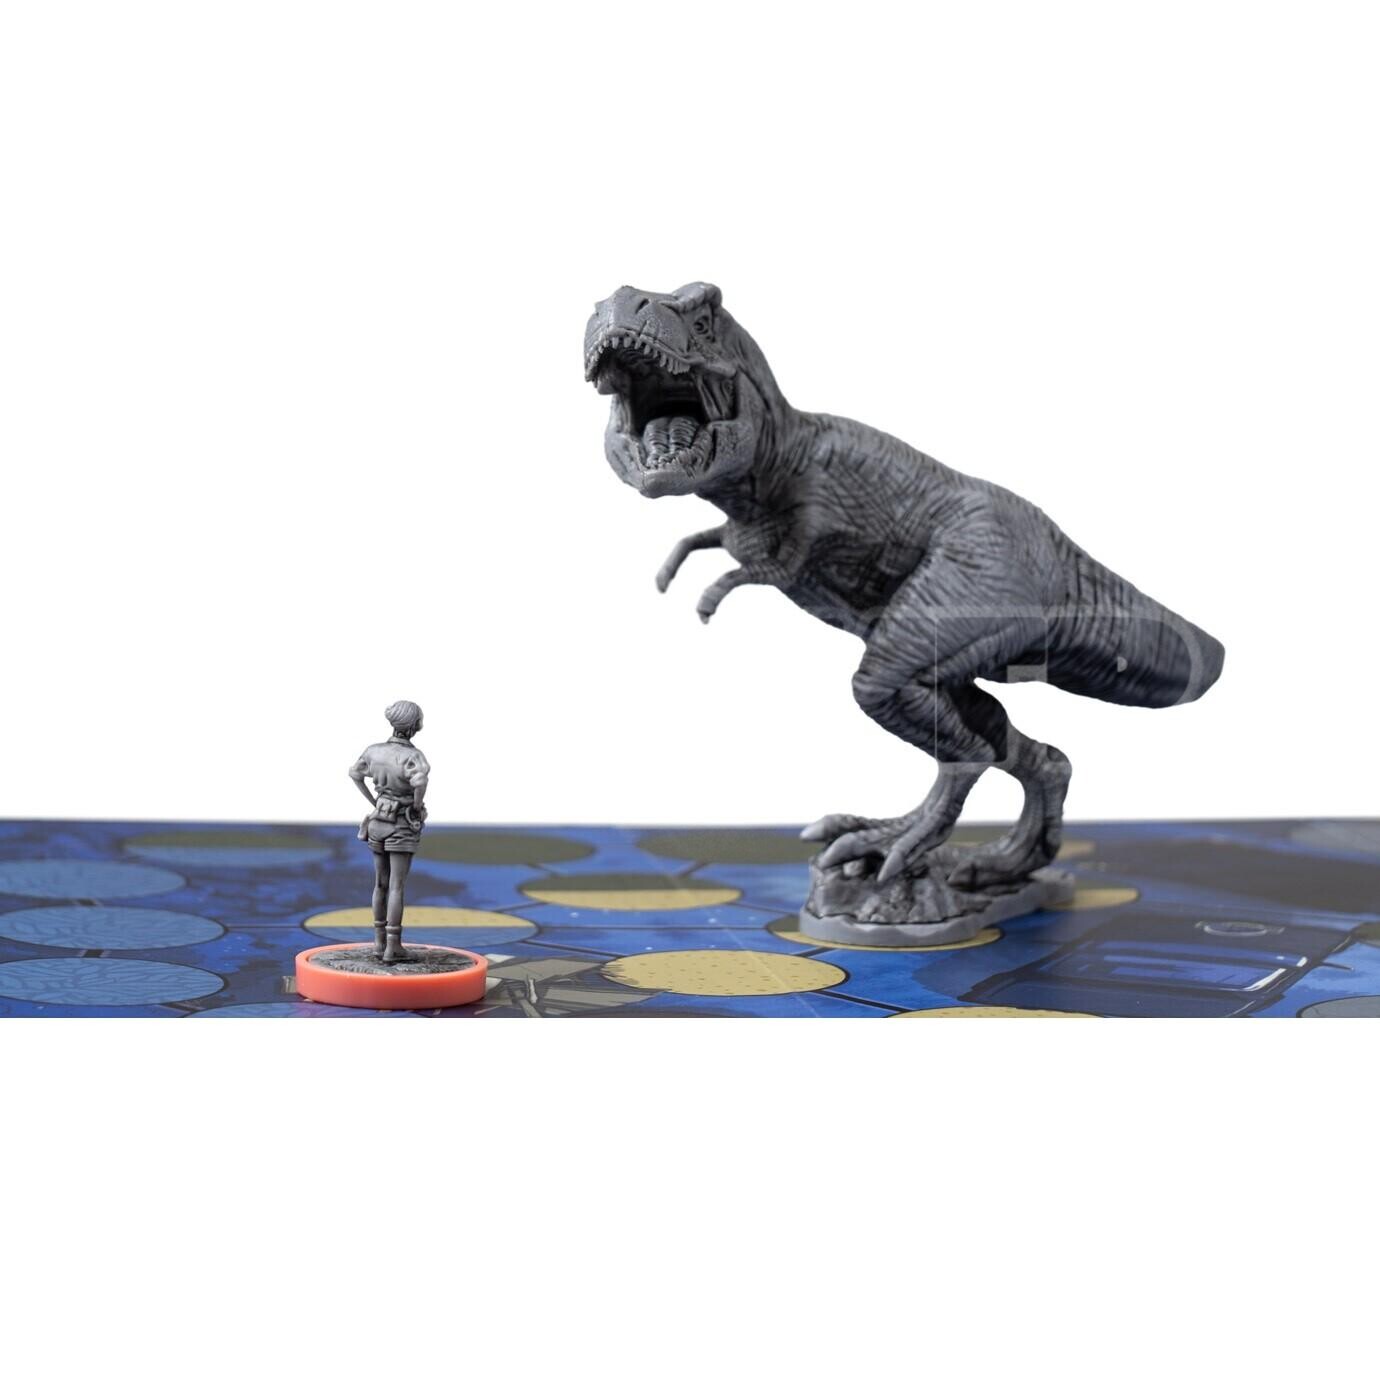 Unmatched. Jurassic Park - Sattler vs. T-Rex